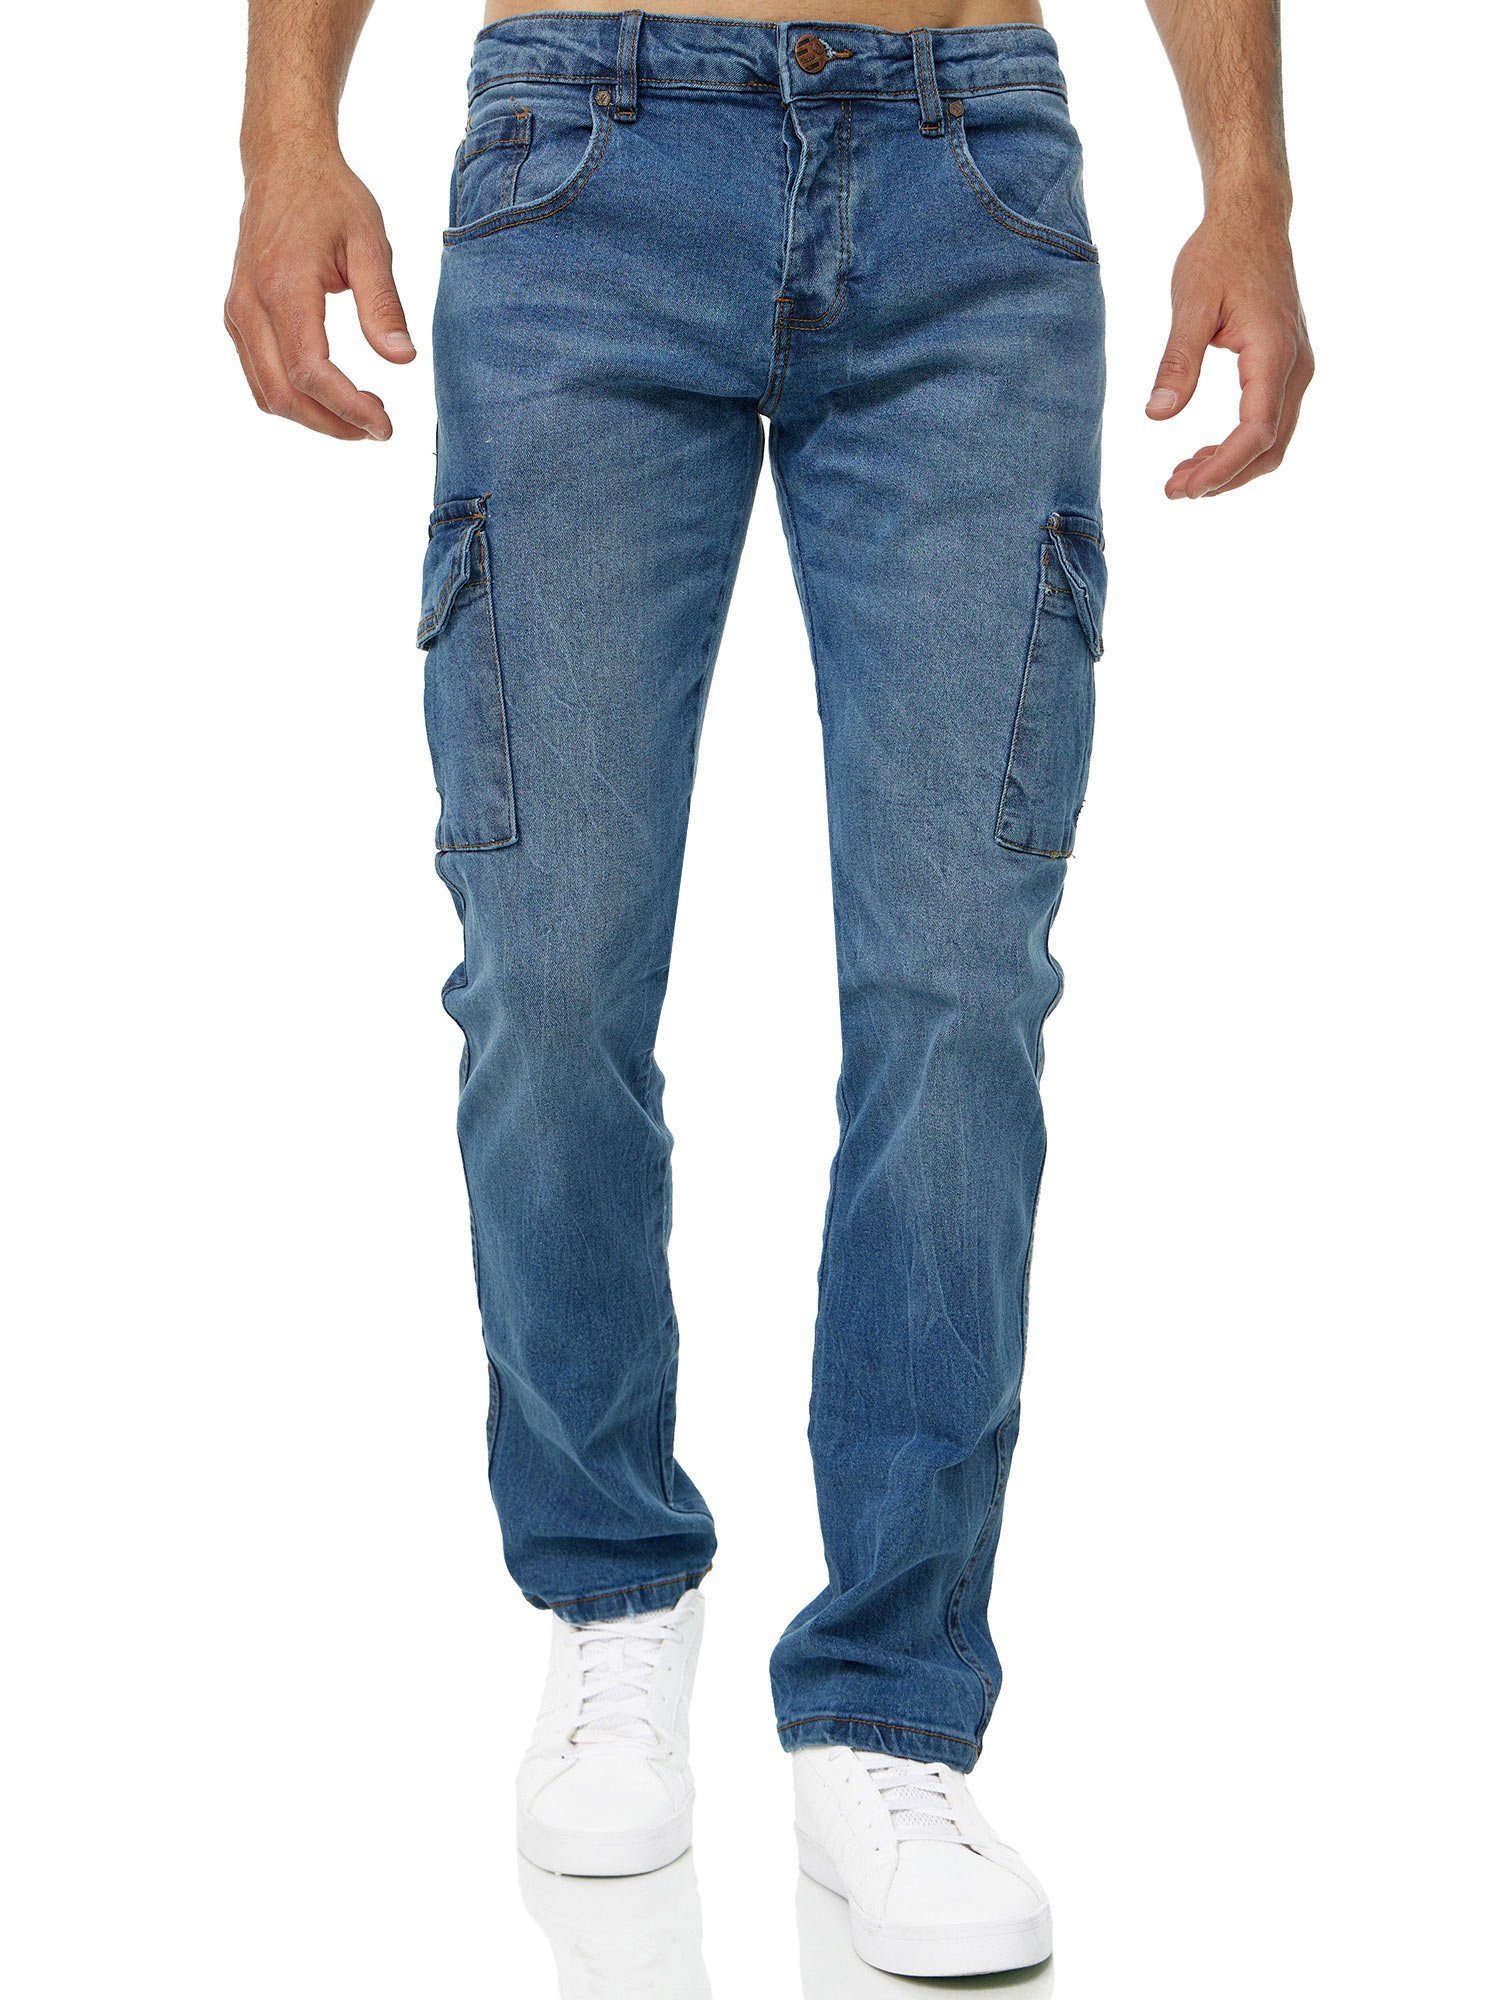 Tazzio Straight-Jeans A104 Regular Fit Cargo Denim Jeans Hose blau